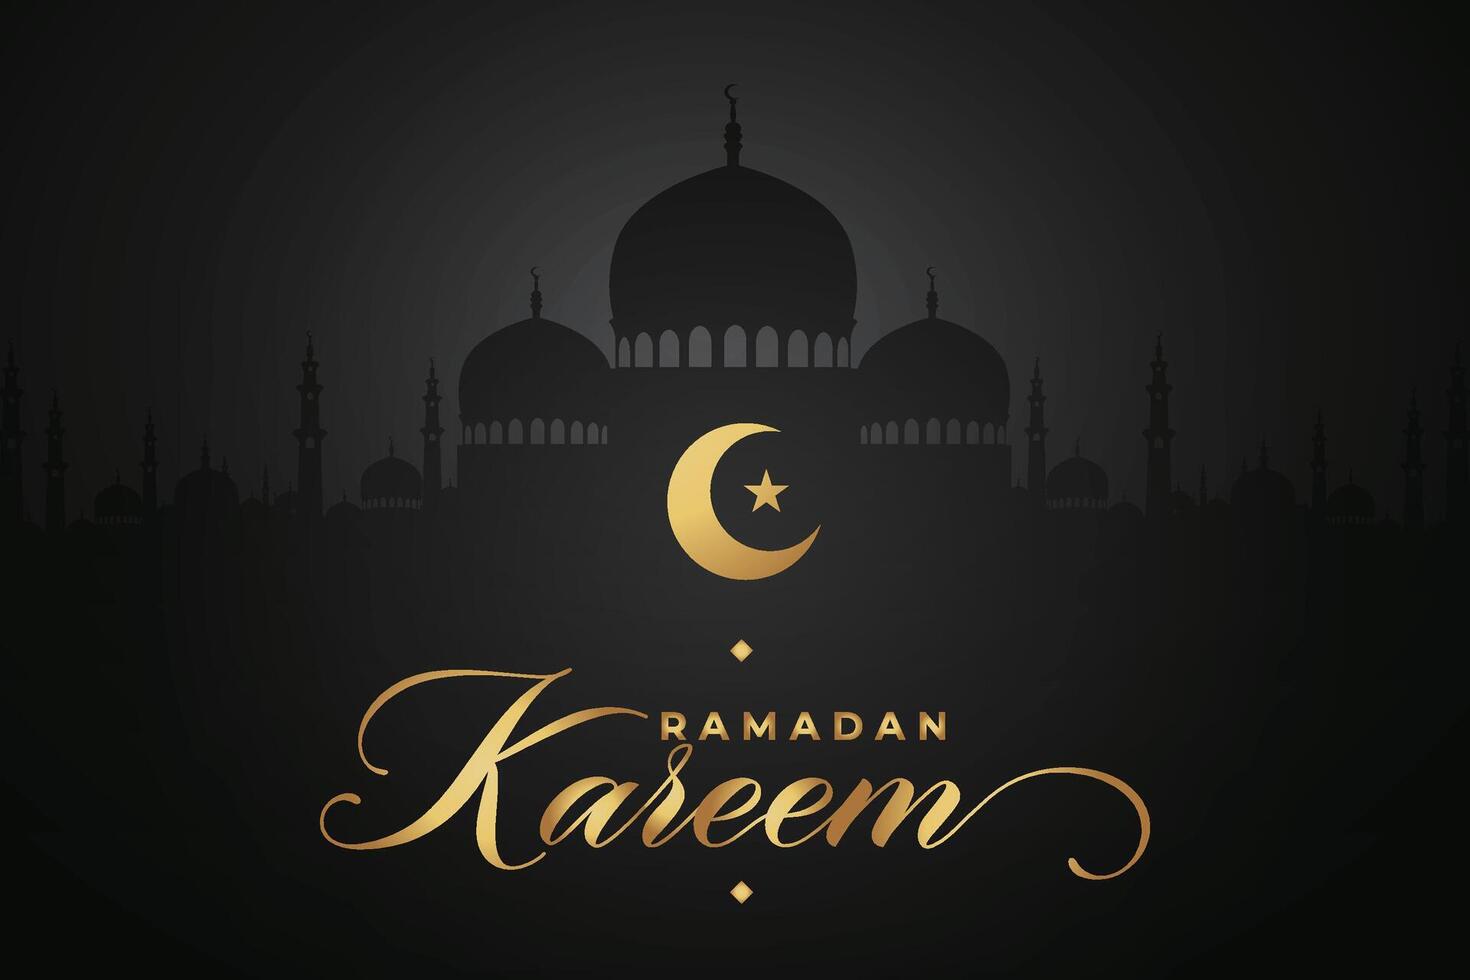 elegante lujo Ramadán, eid Mubarak decorativo fiesta tarjeta vector